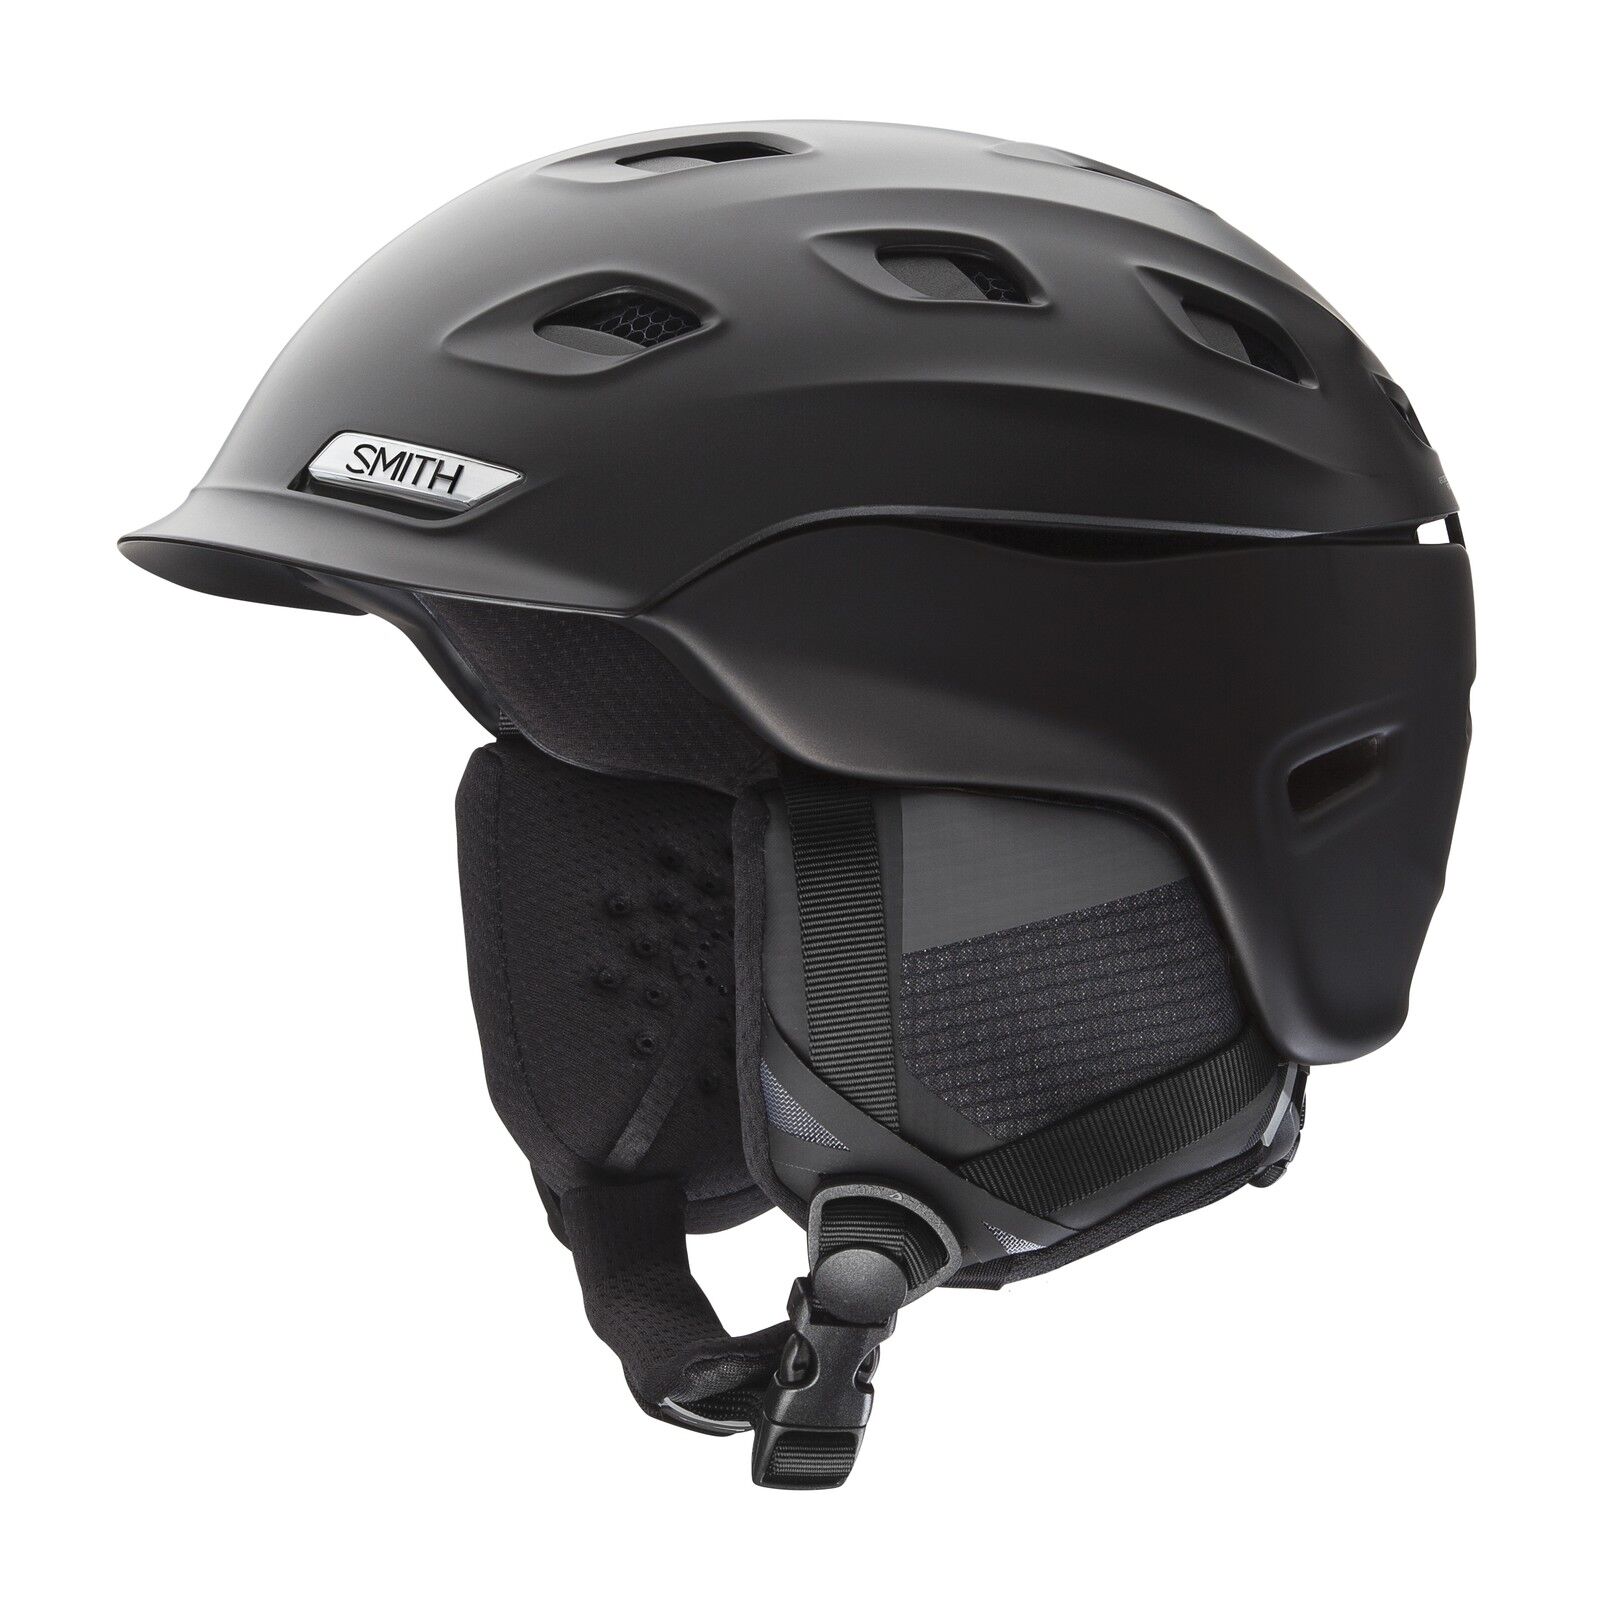 Smith - Vantage M - Ski helmet - Men's